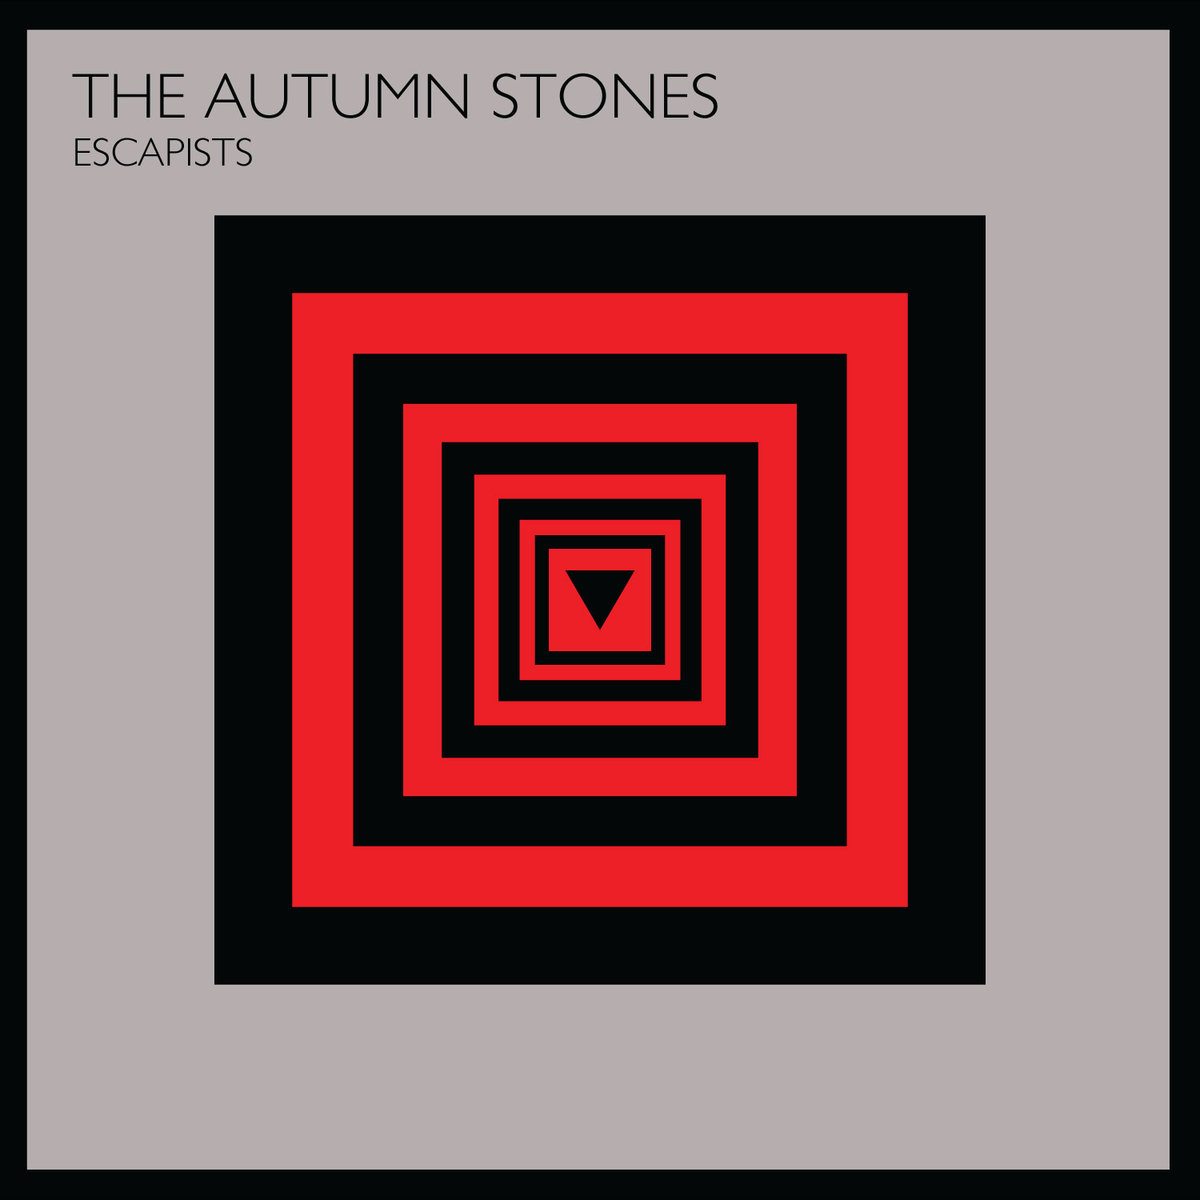 The Autumn Stones Escapists